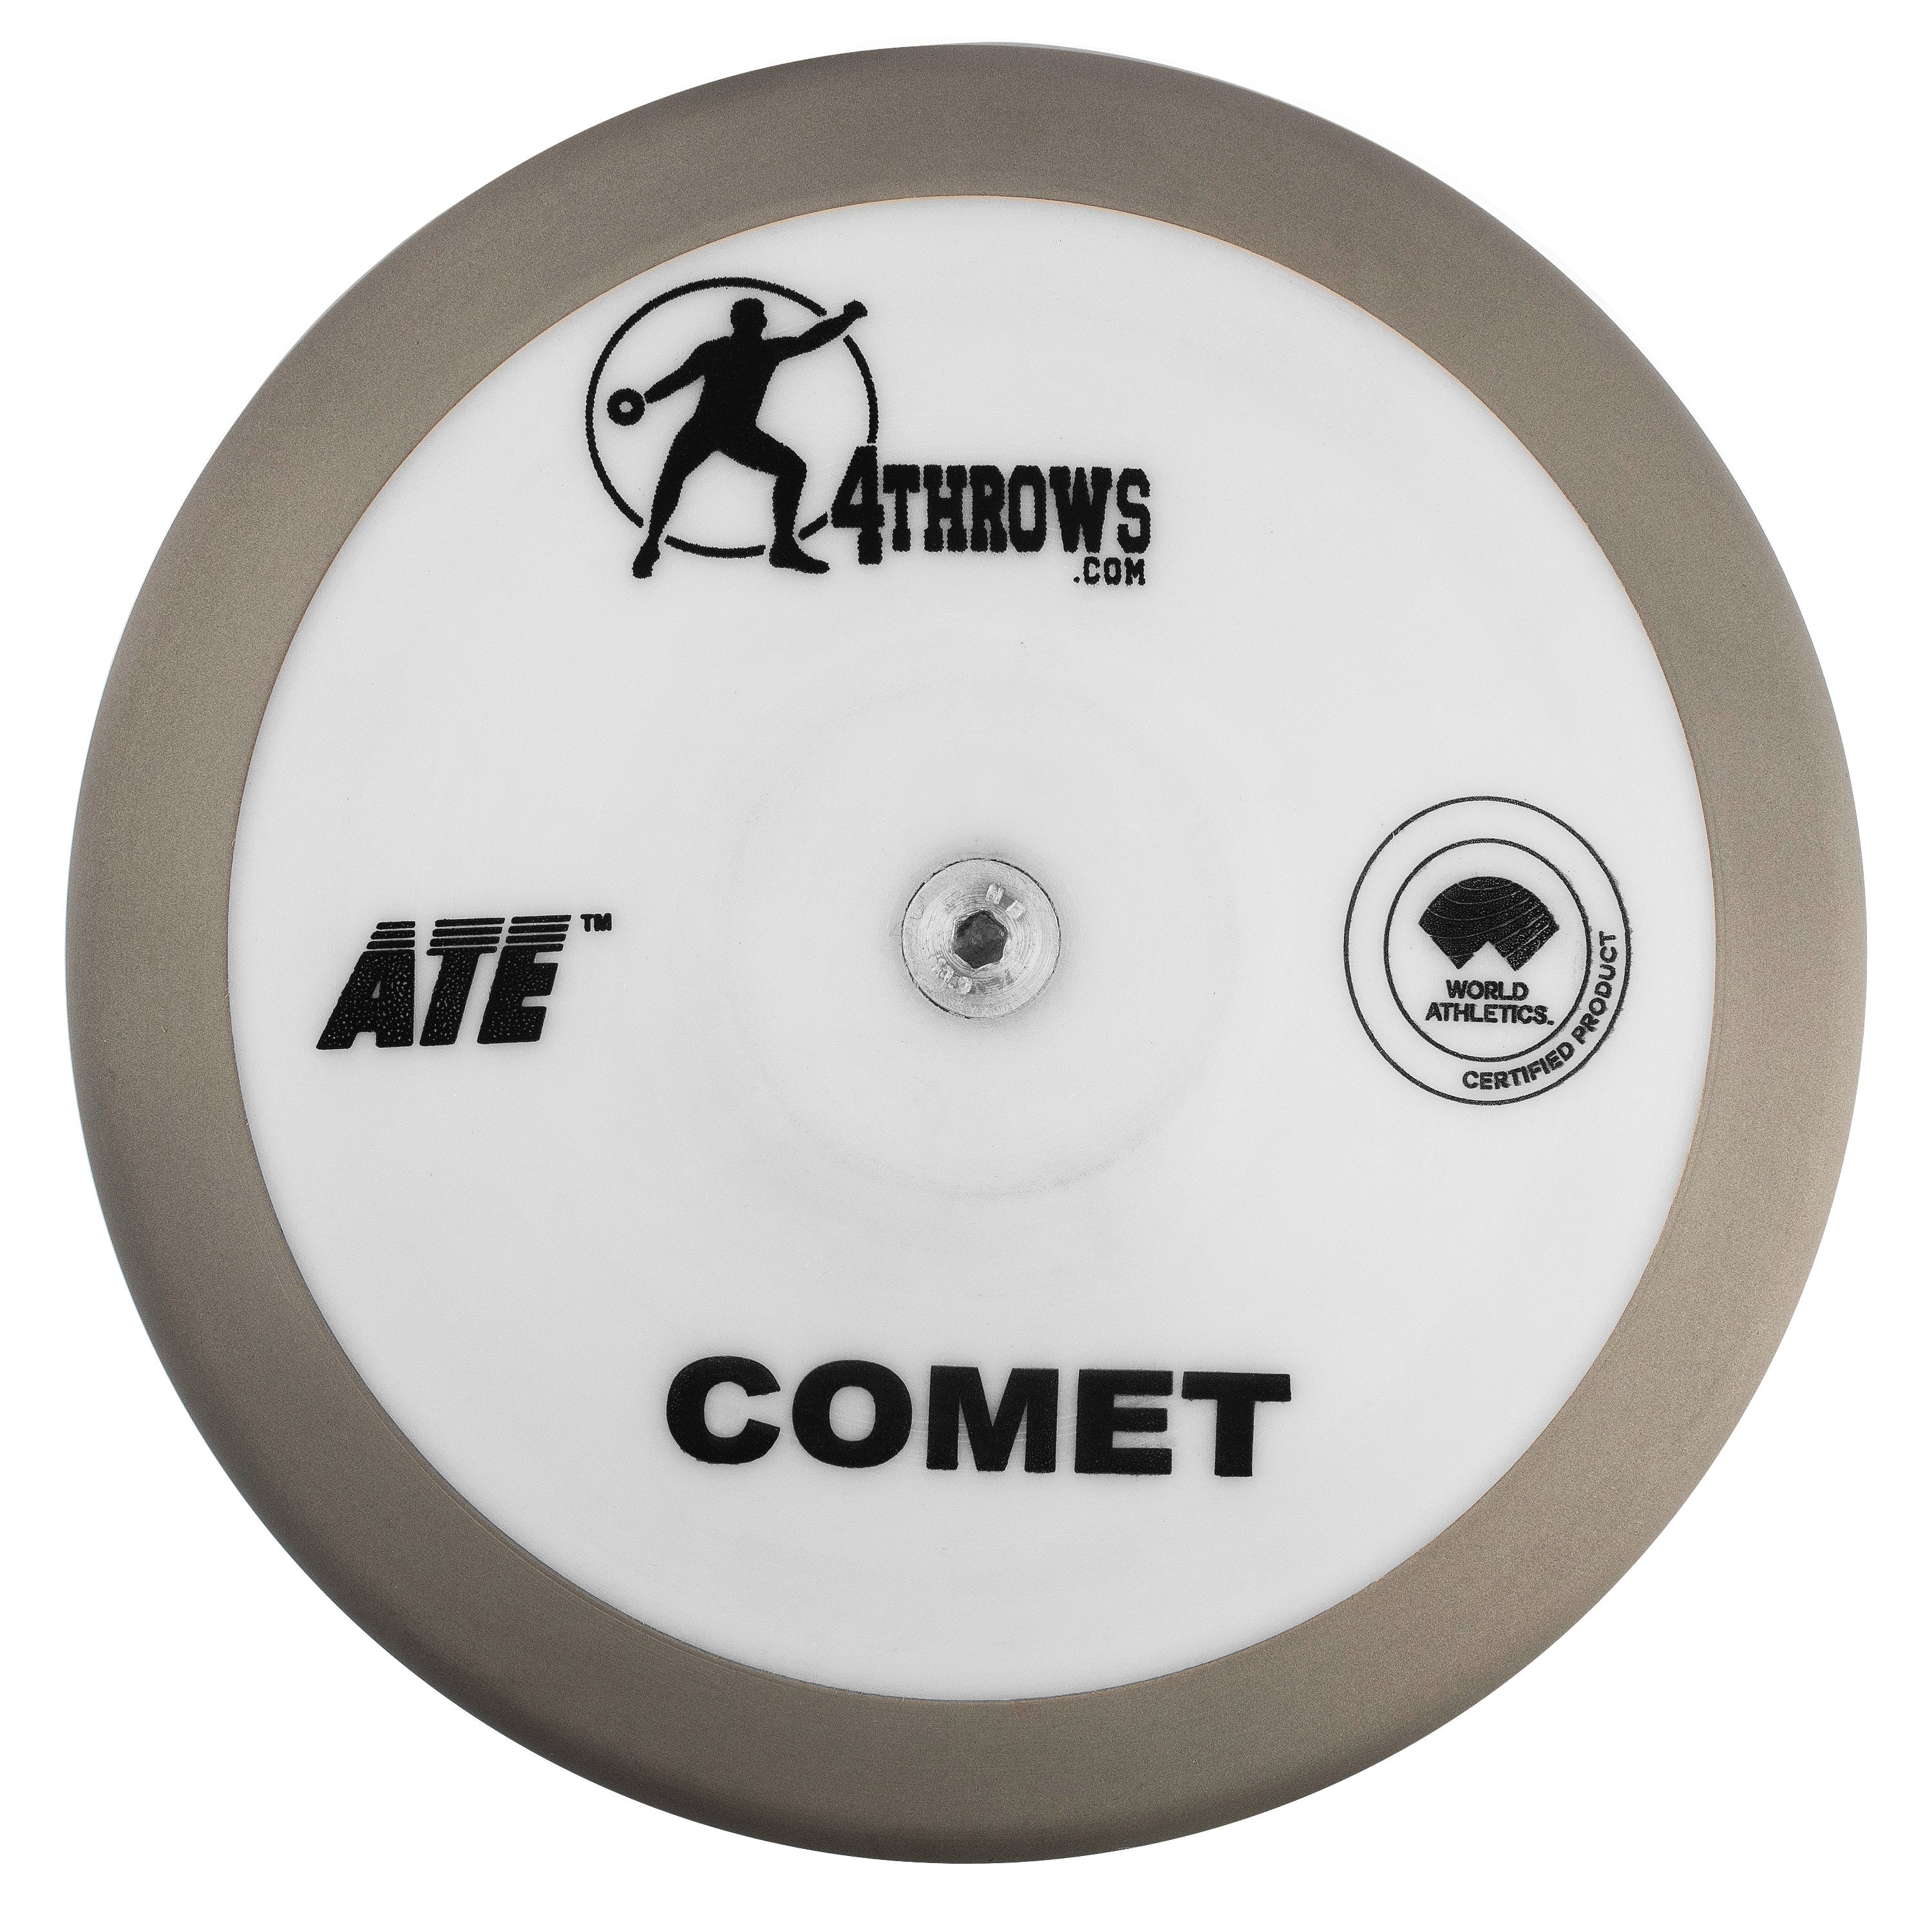 ATE Comet Stainless Steel Rim Discus - 87%